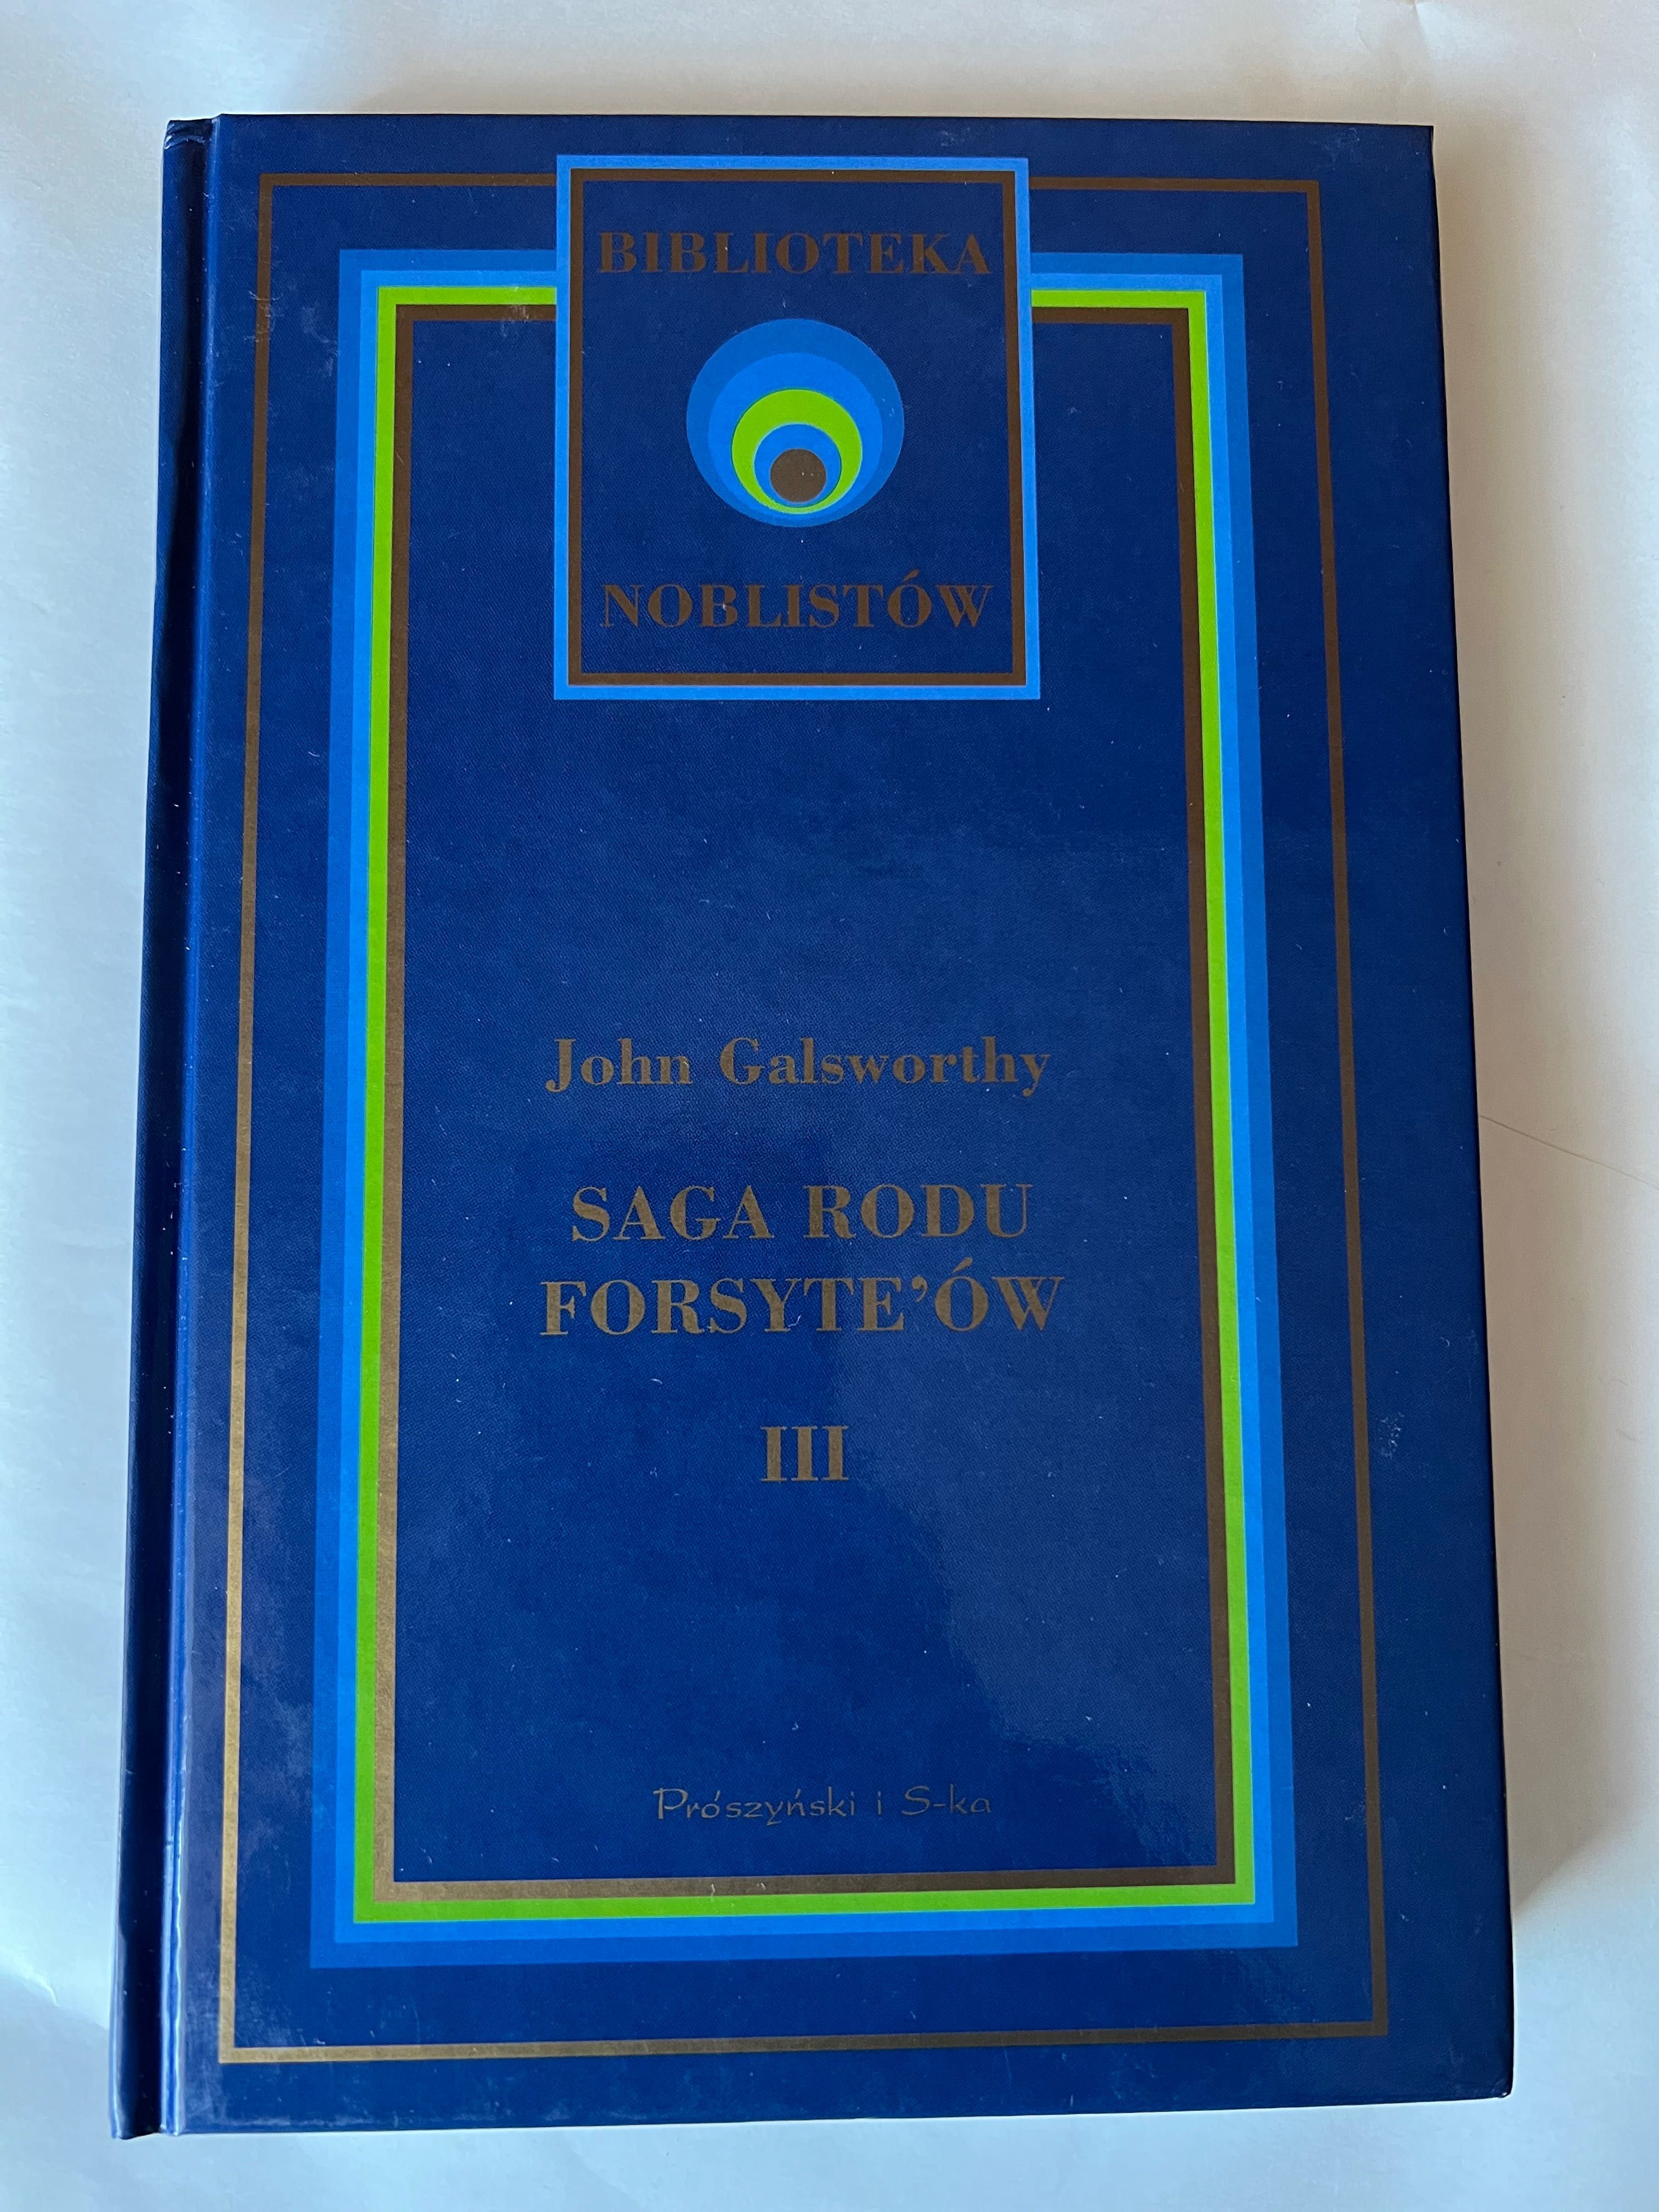 Saga rodu Forsyte'ów  John Galsworthy 3 tomy stan bdb twarda oprawa